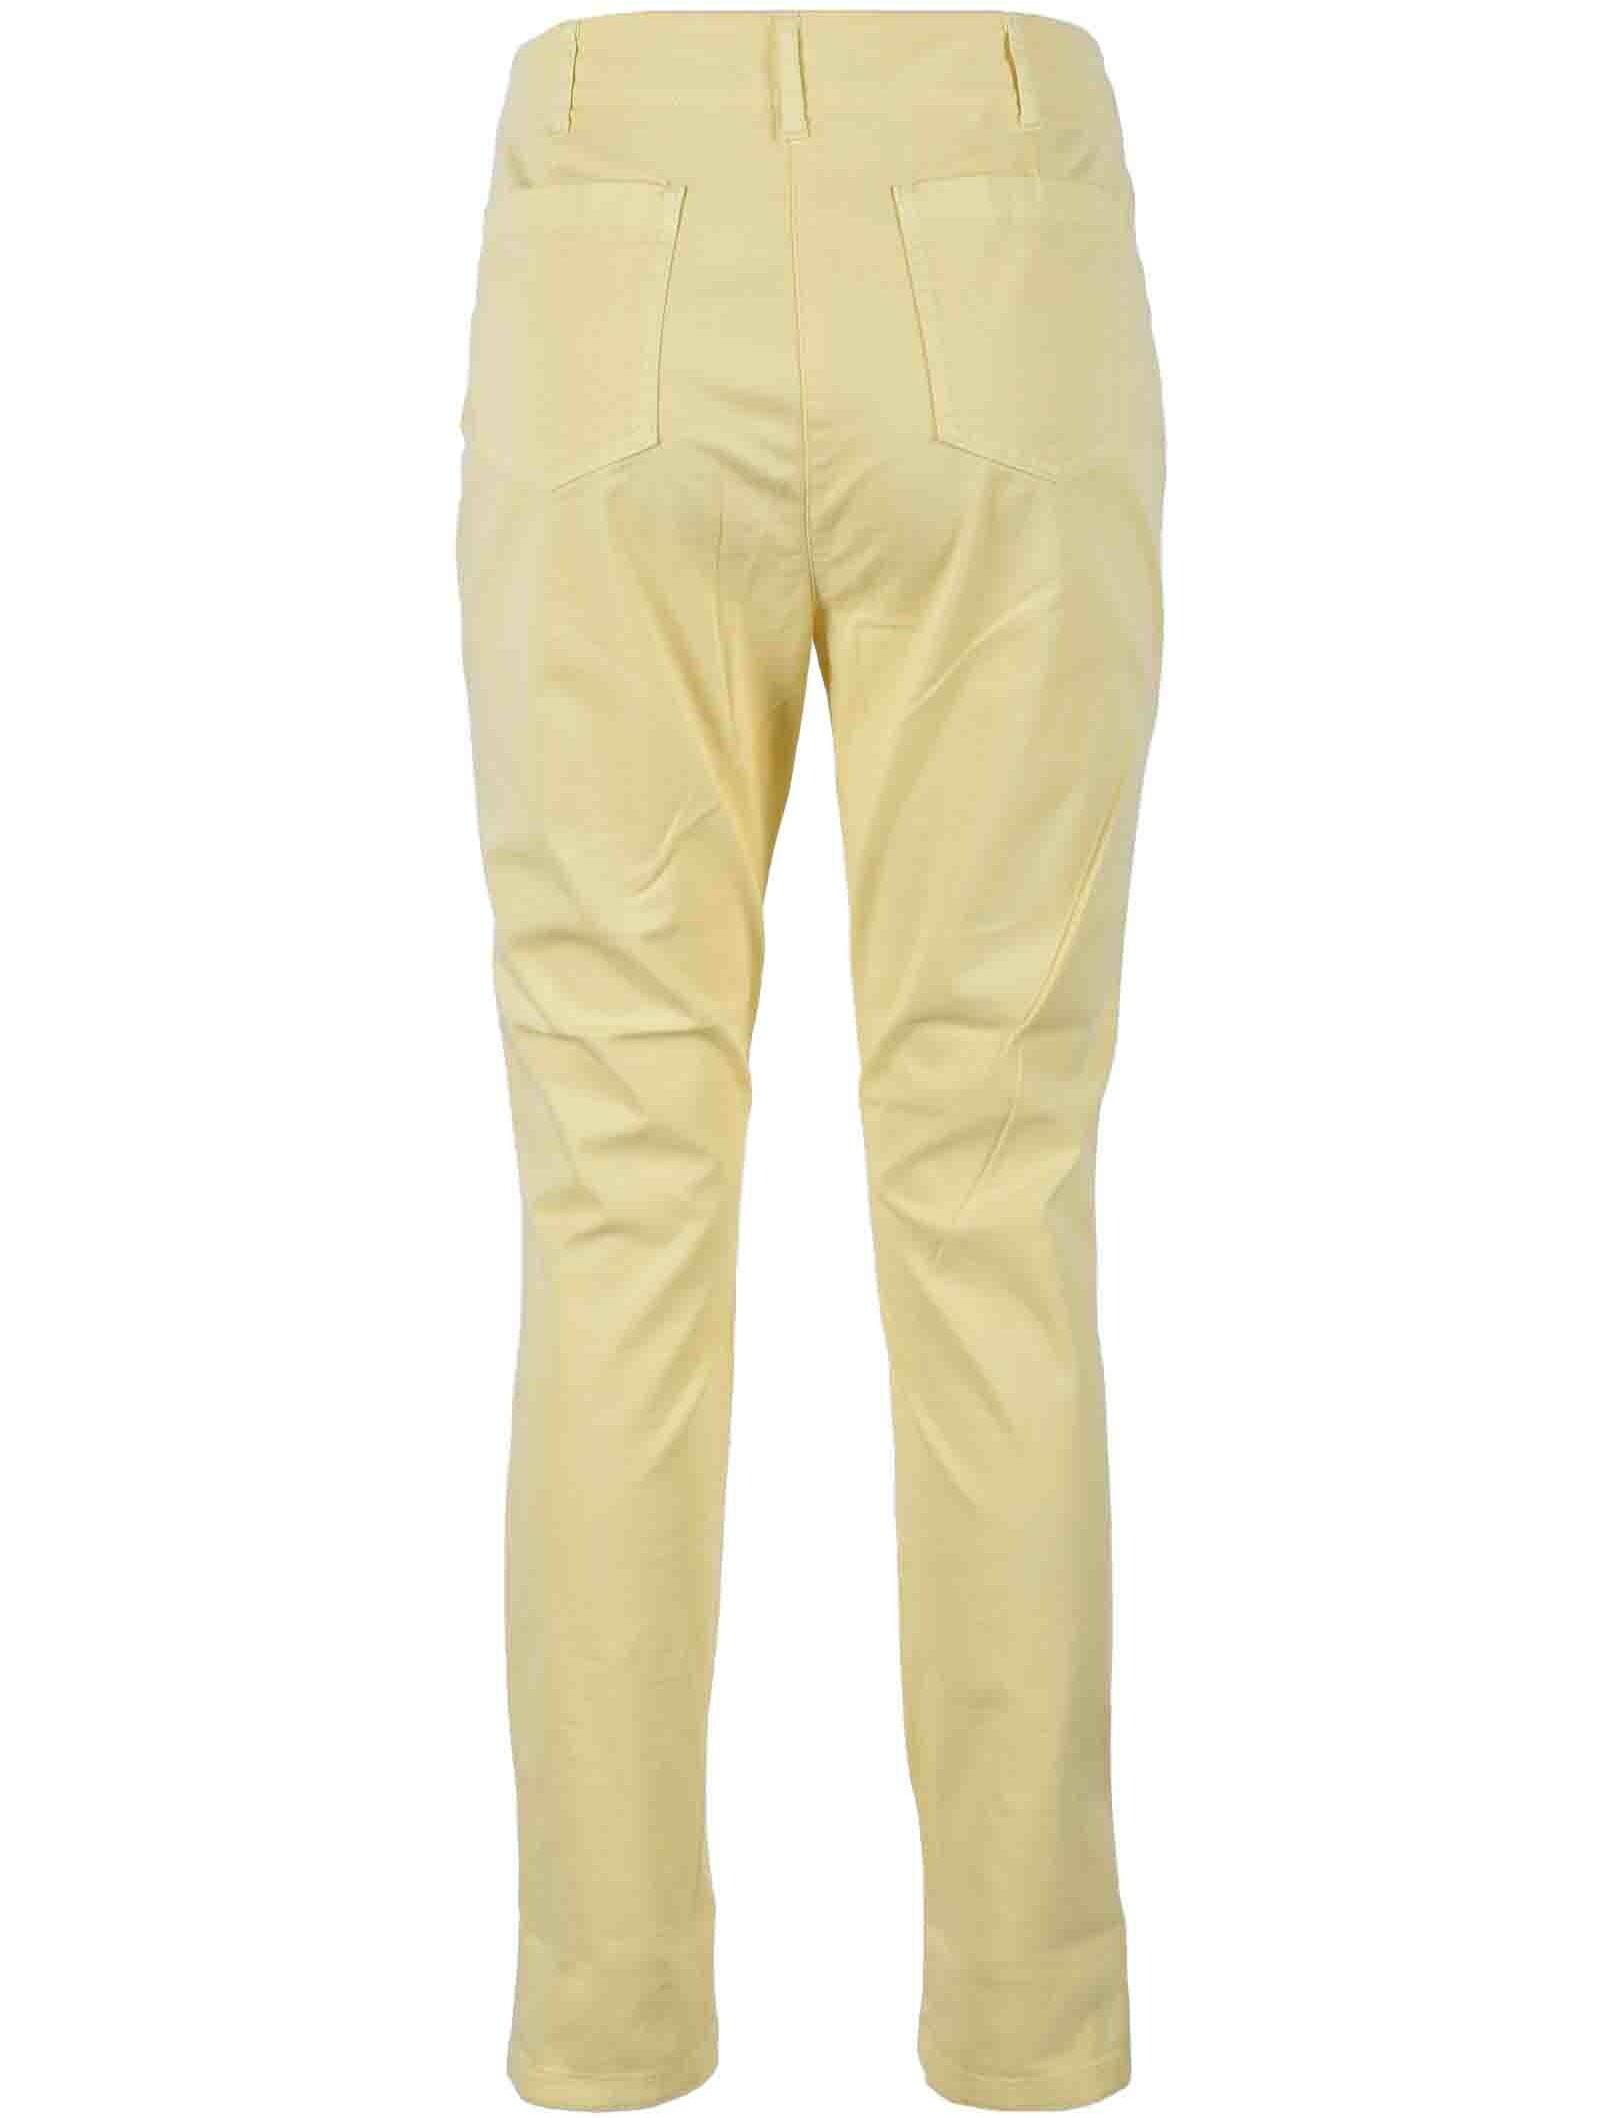 Women's Yellow Pants